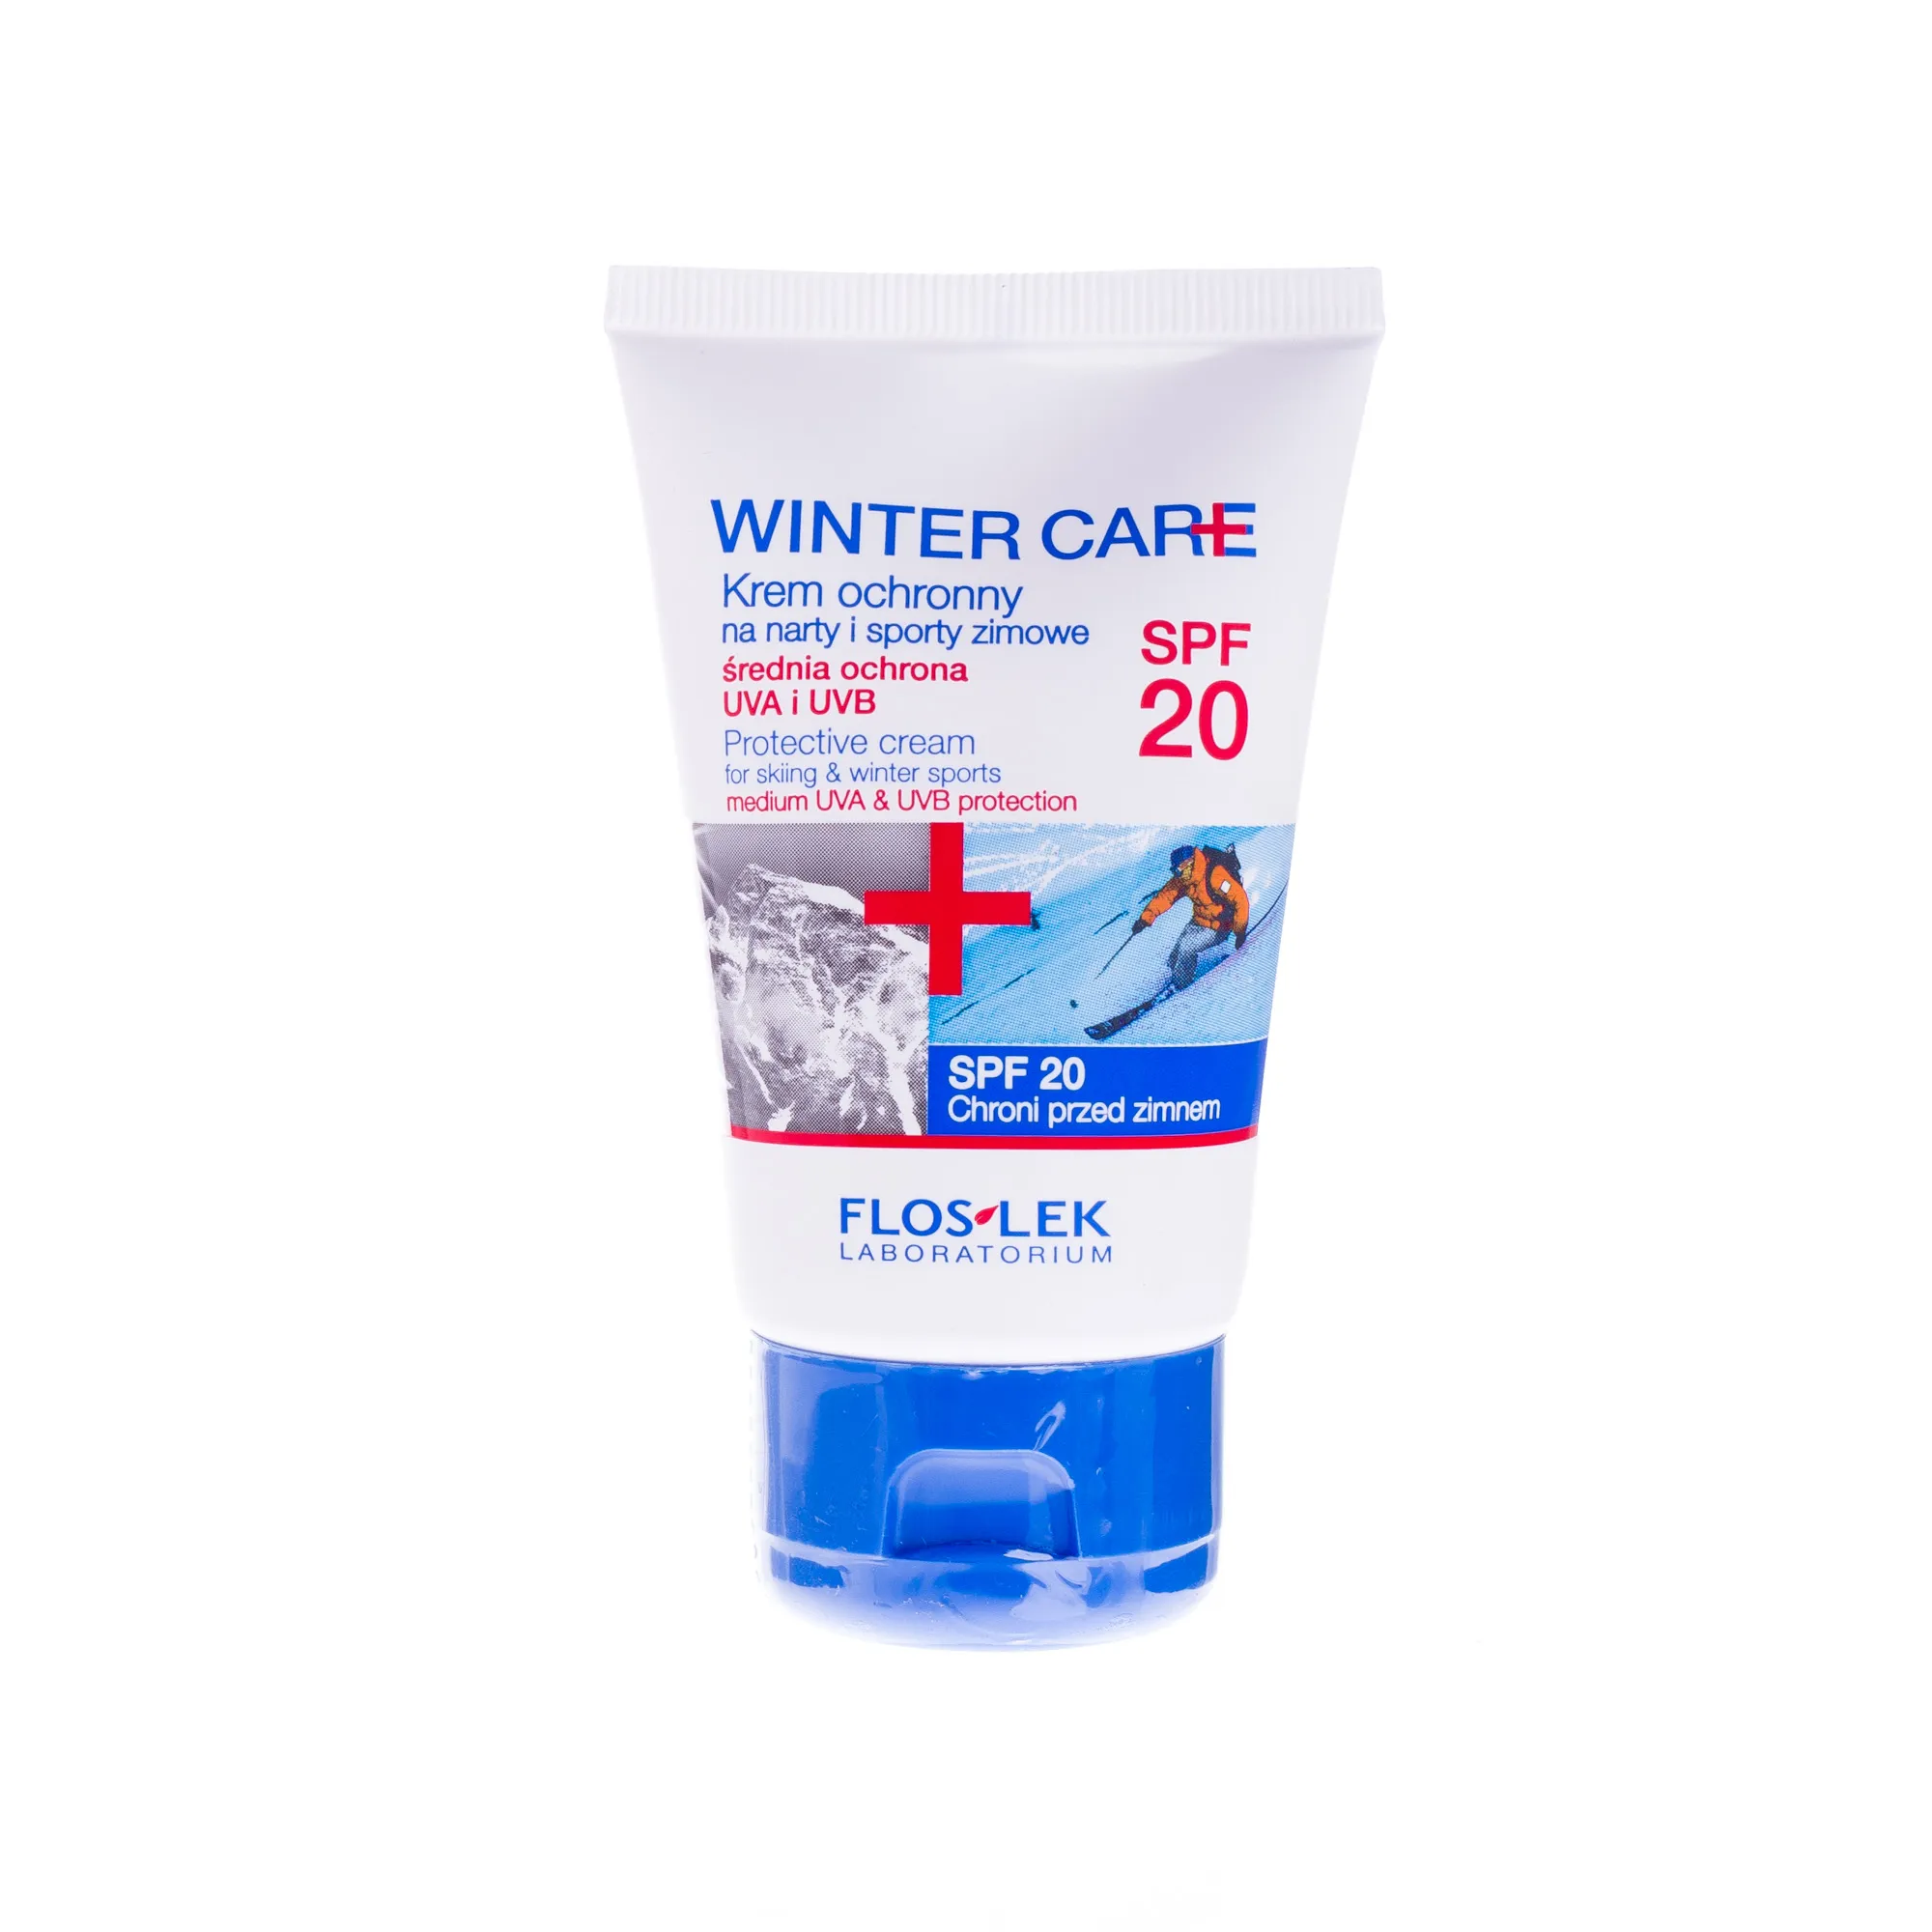 Flos Lek Winter Care, krem ochronny na narty i sporty zimowe, SPF 20 / 50 ml